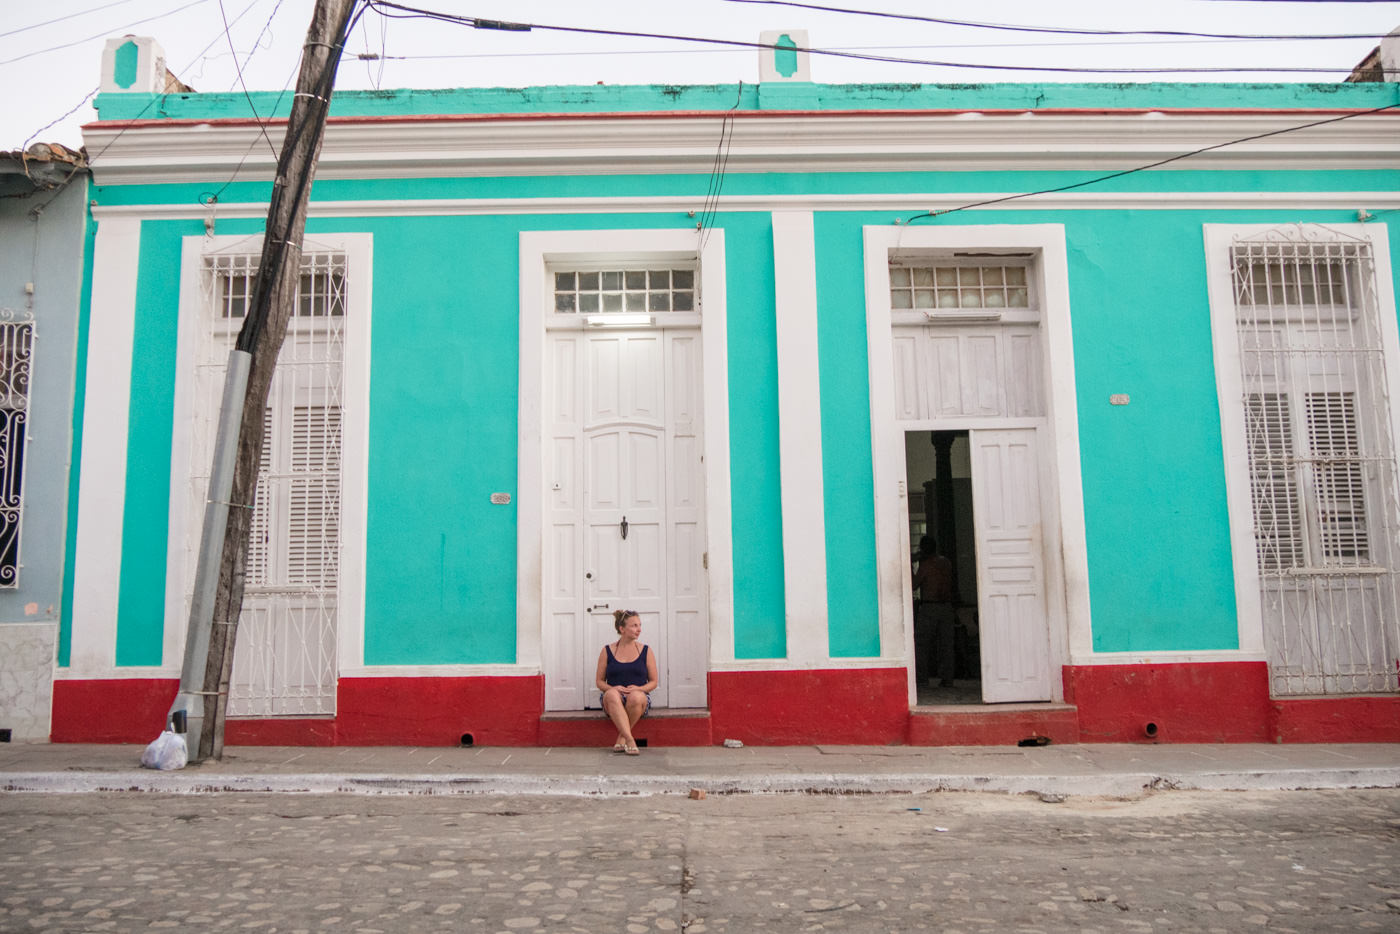 Julia vor bunten Häuserfassaden in Trinidad, Kuba